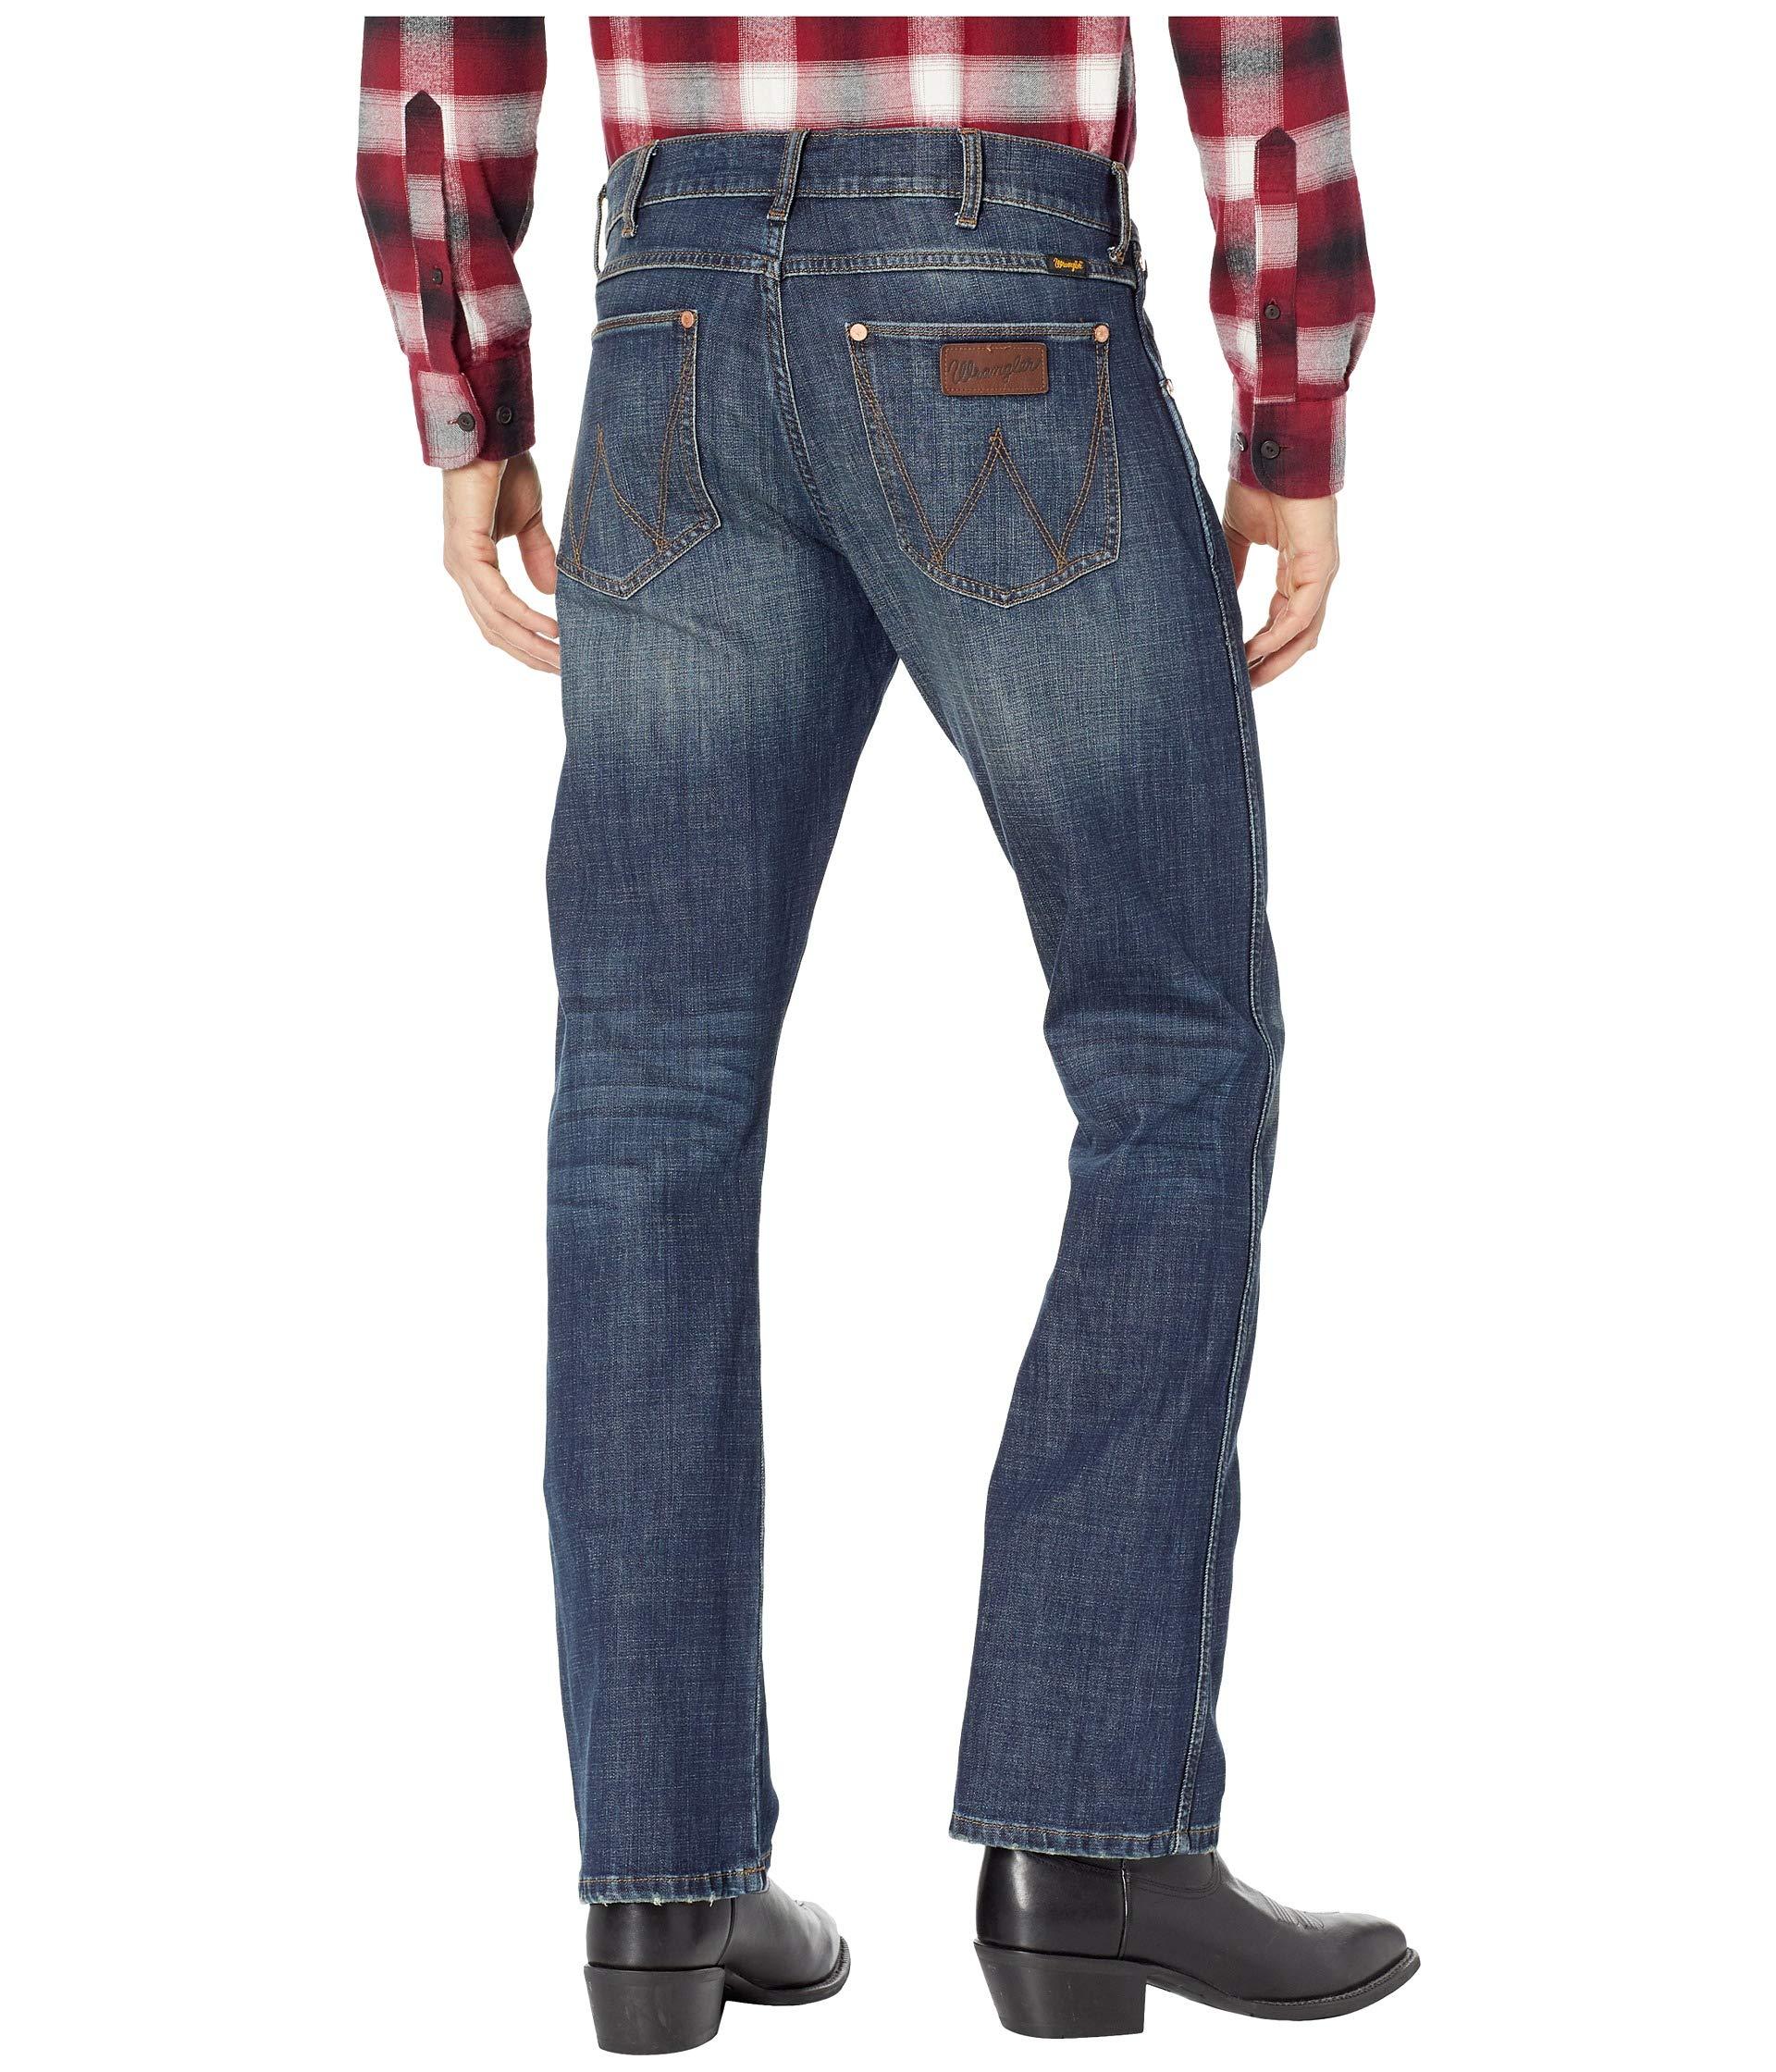 Wrangler Denim Retro Premium Slim Boot Jeans in Blue for Men - Lyst